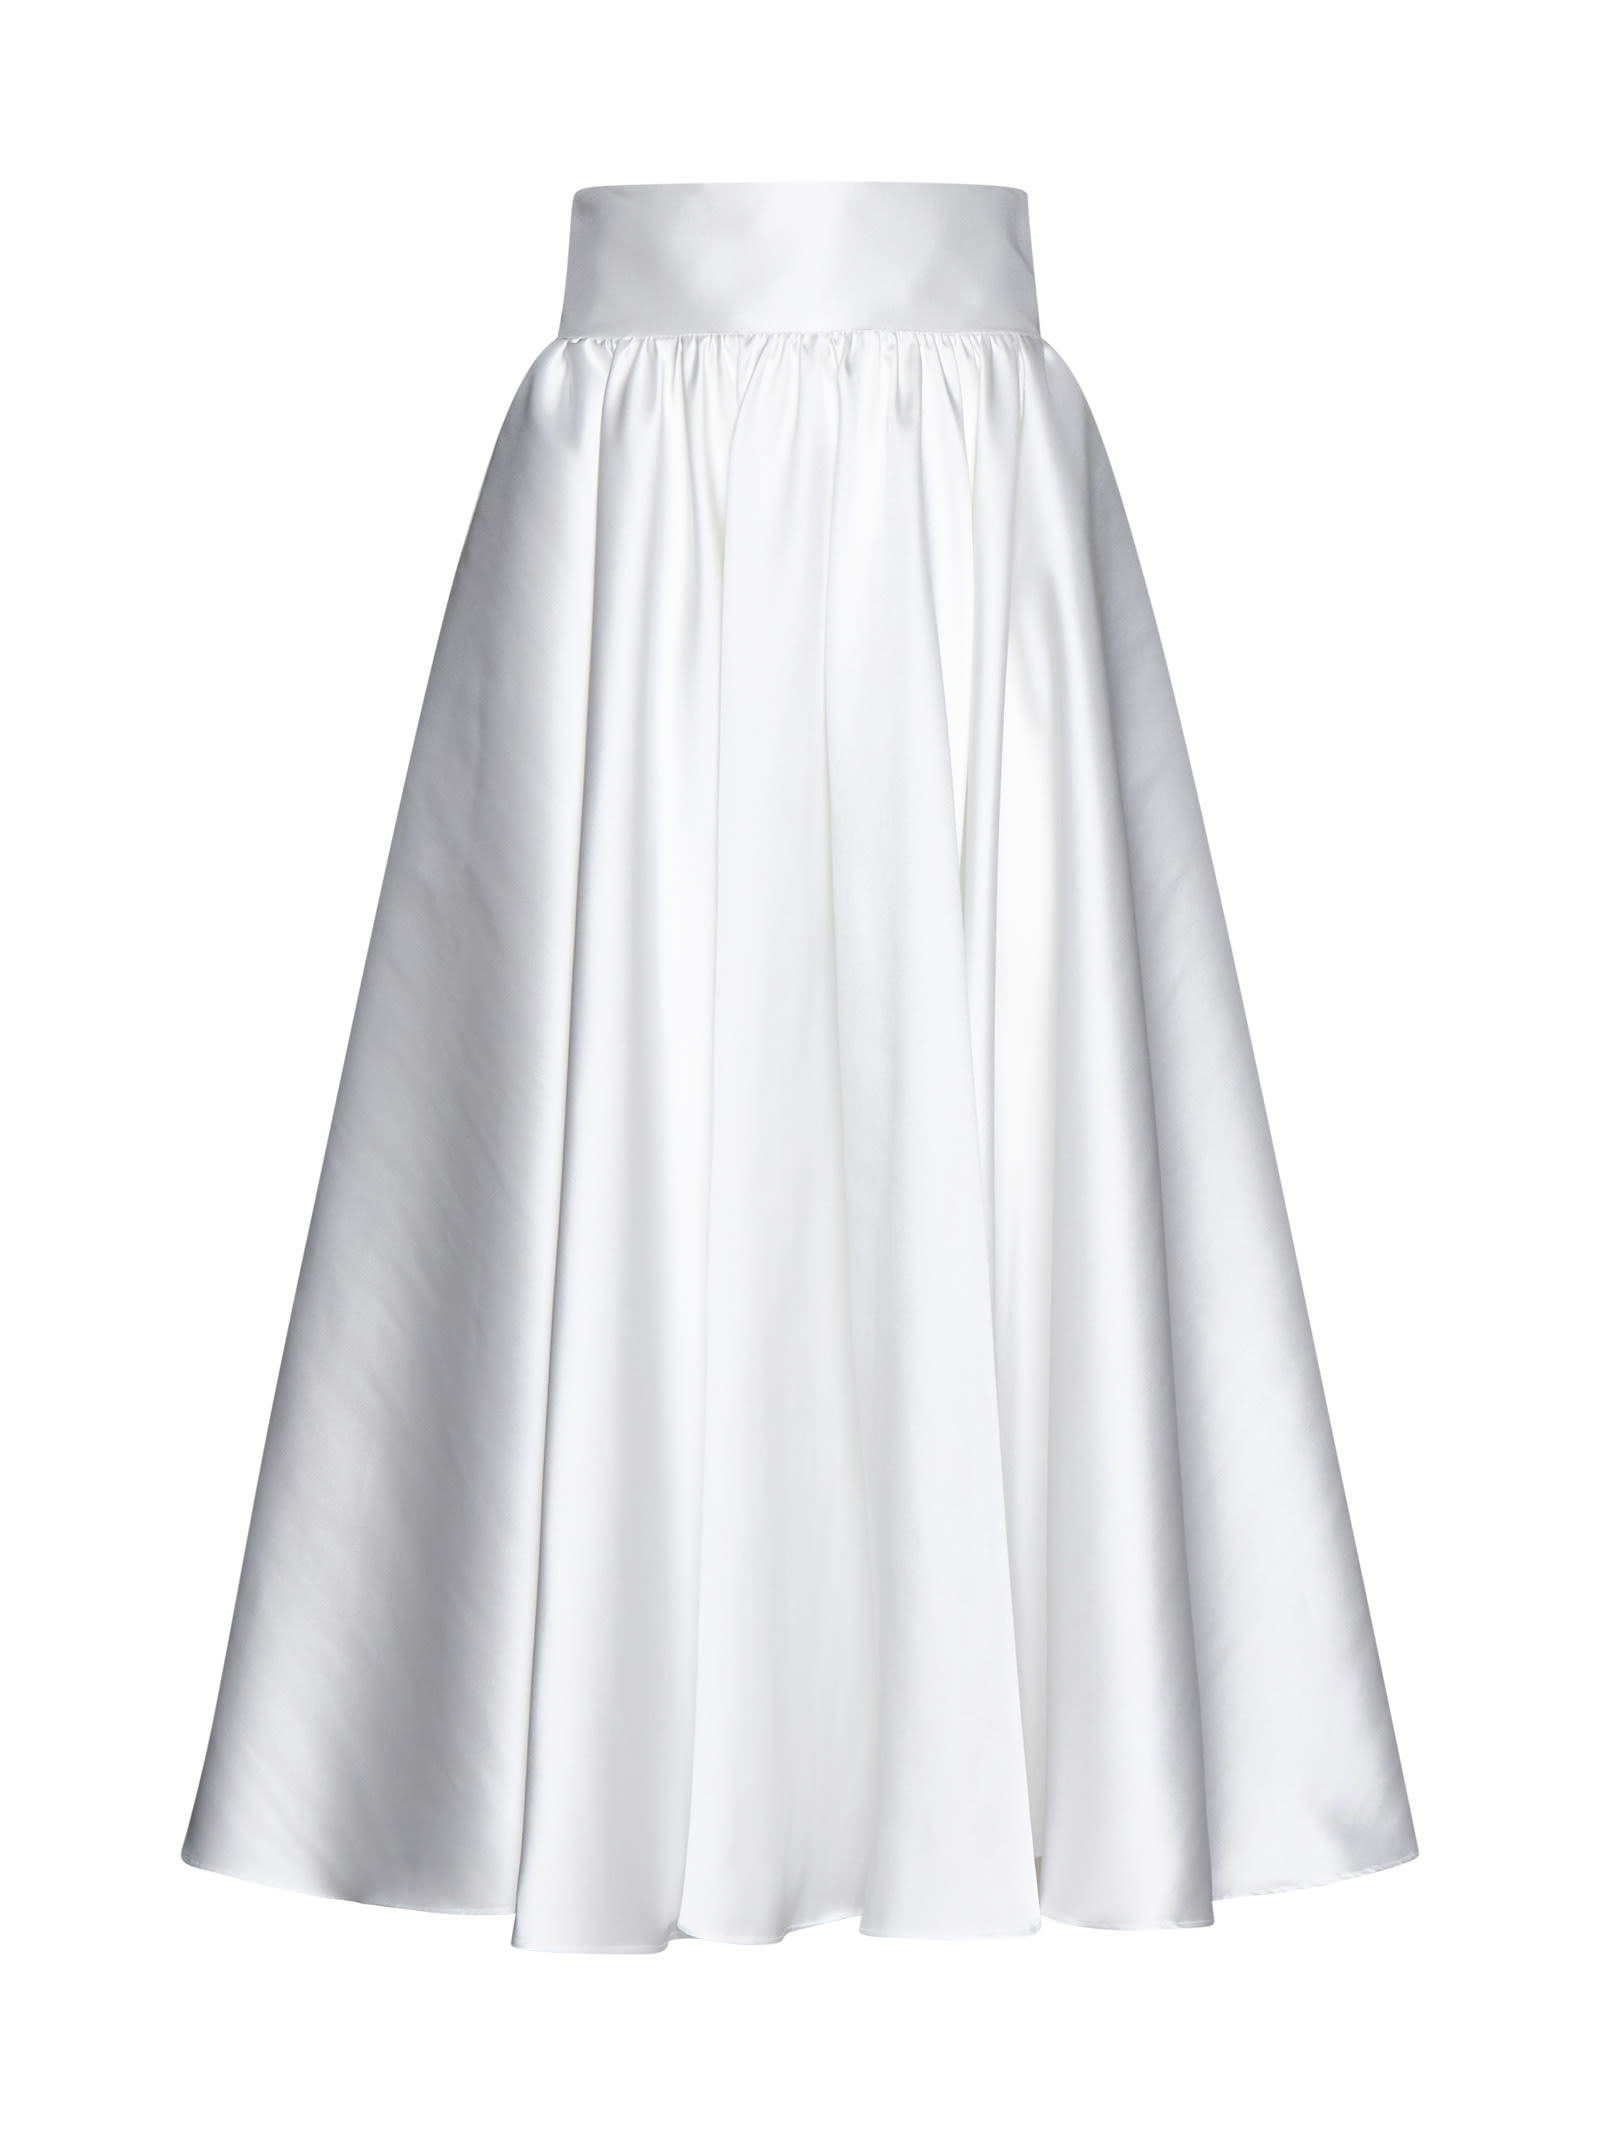 blanca vita skirt